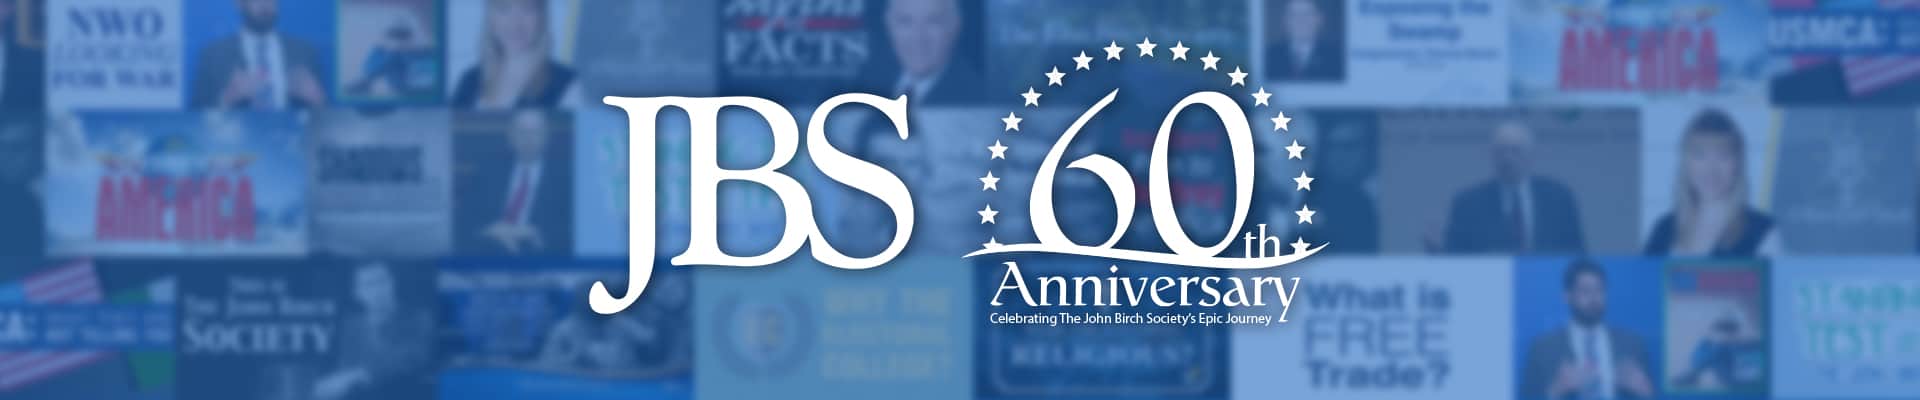 John Birch Society Video: JBS 60th Anniversary